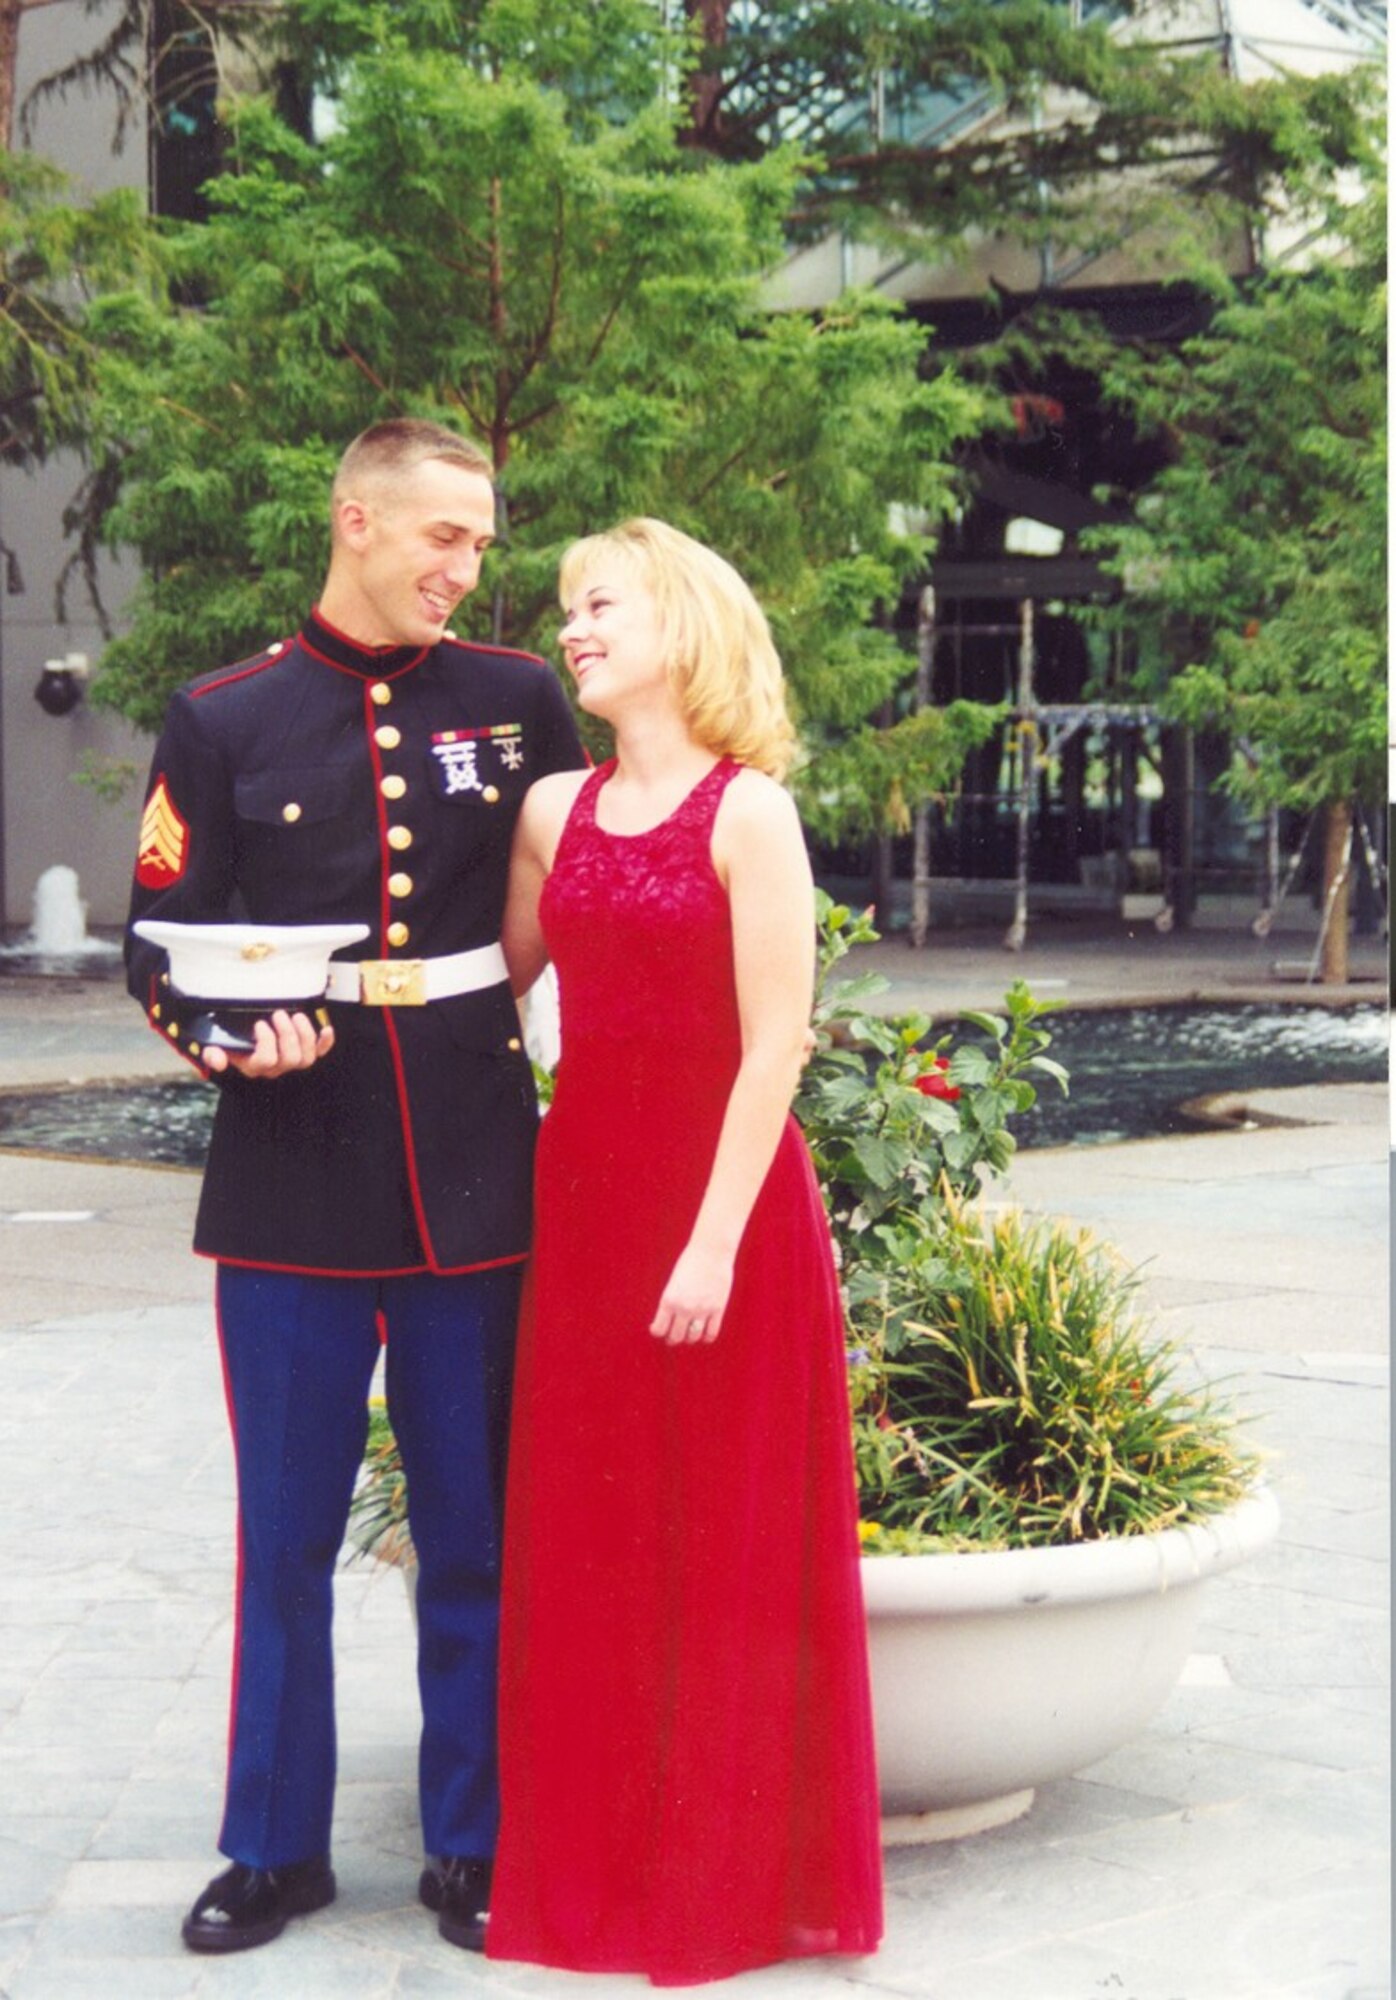 Tech. Sgt. Matthew Sheley embracing his wife, Andrea.